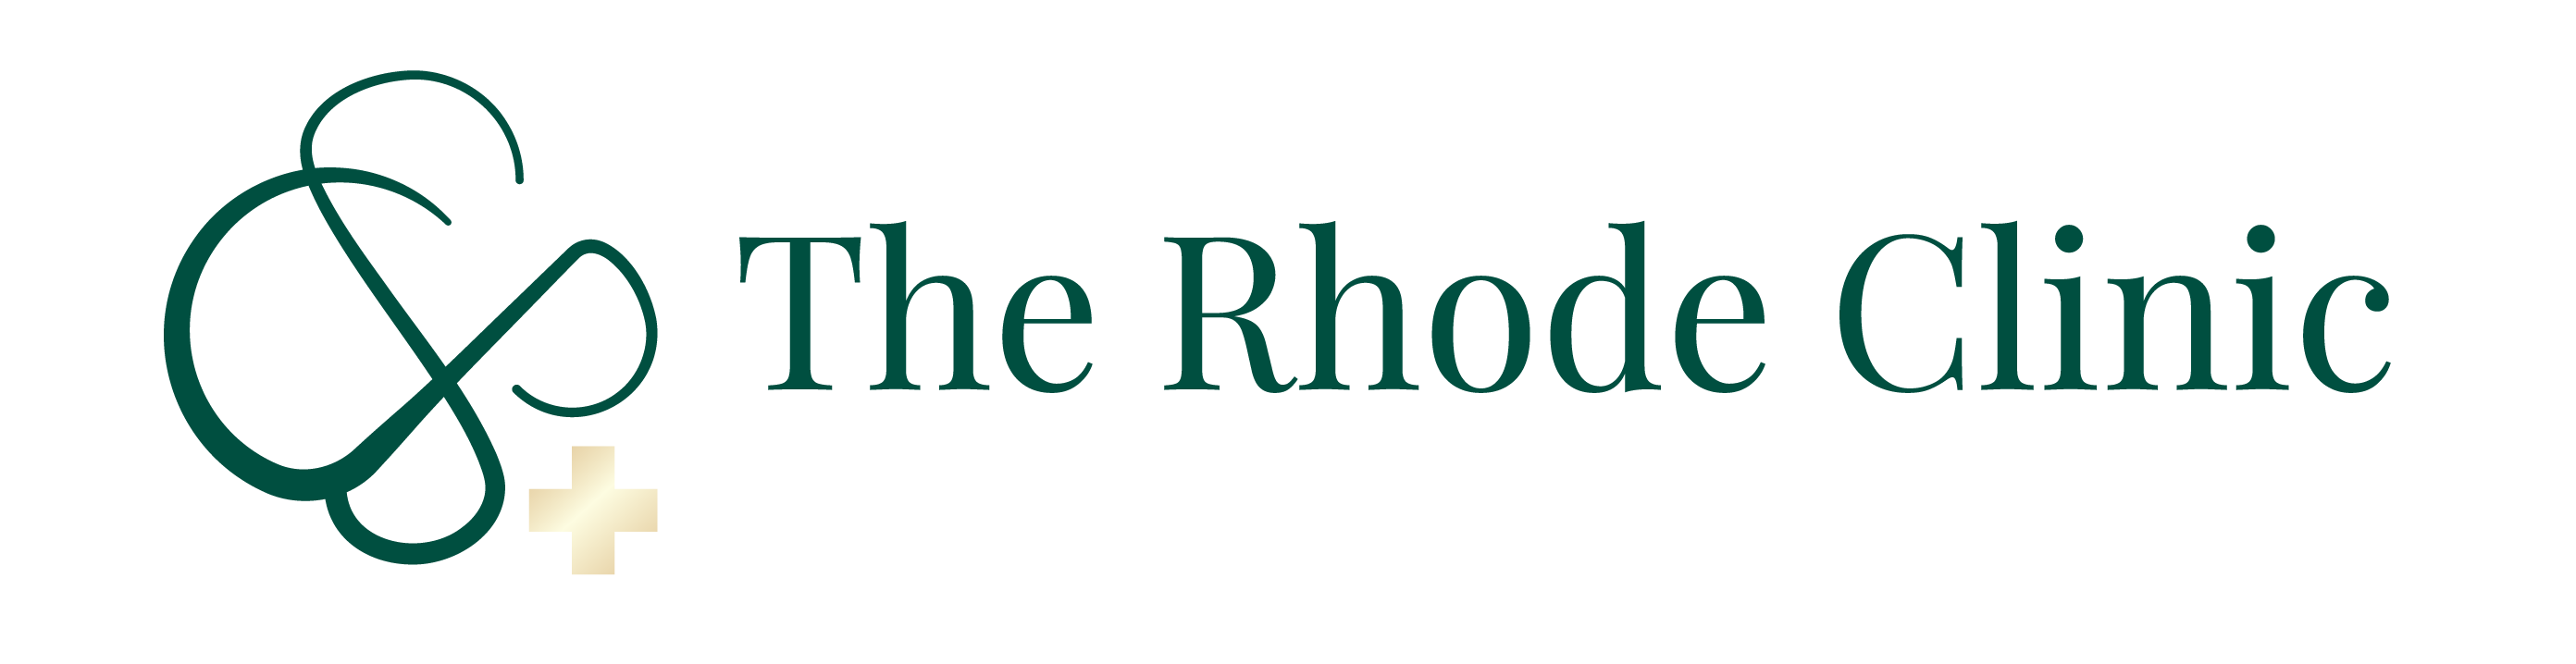 The Rhode Clinic